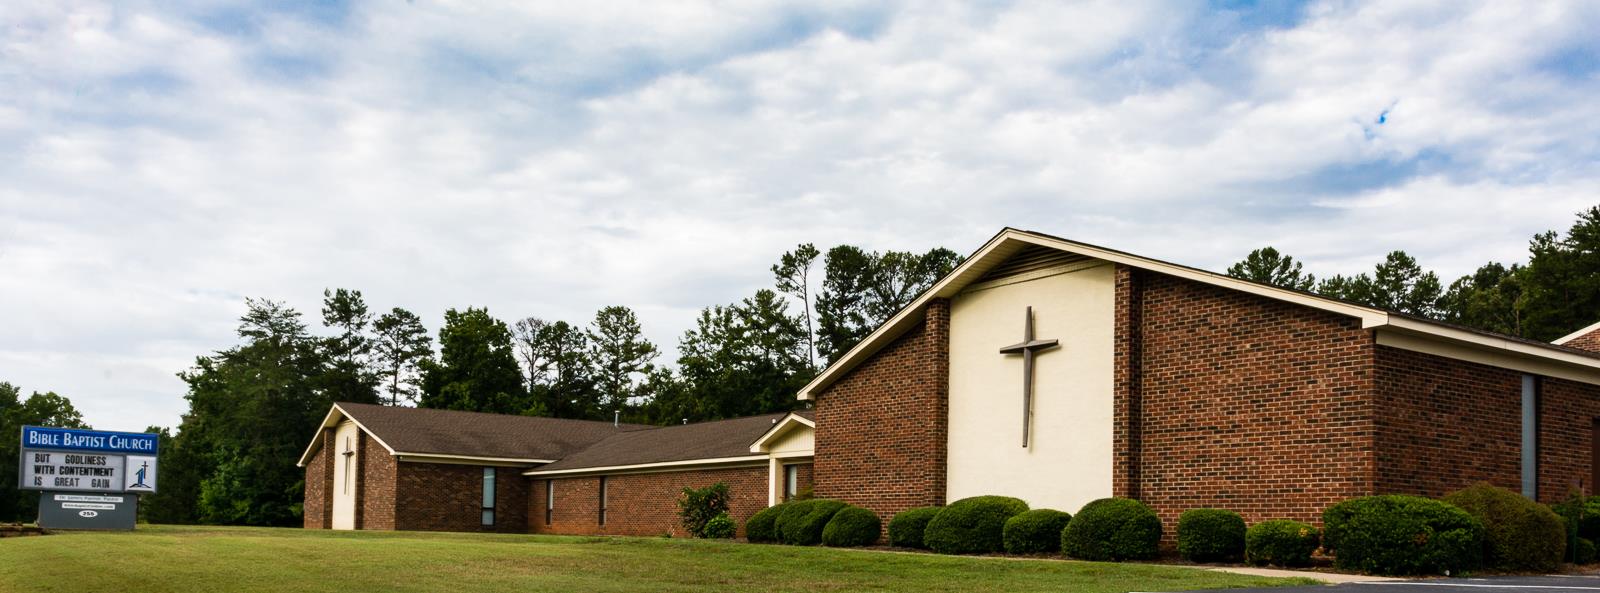 Bible Baptist Church - Fort Mill, SC